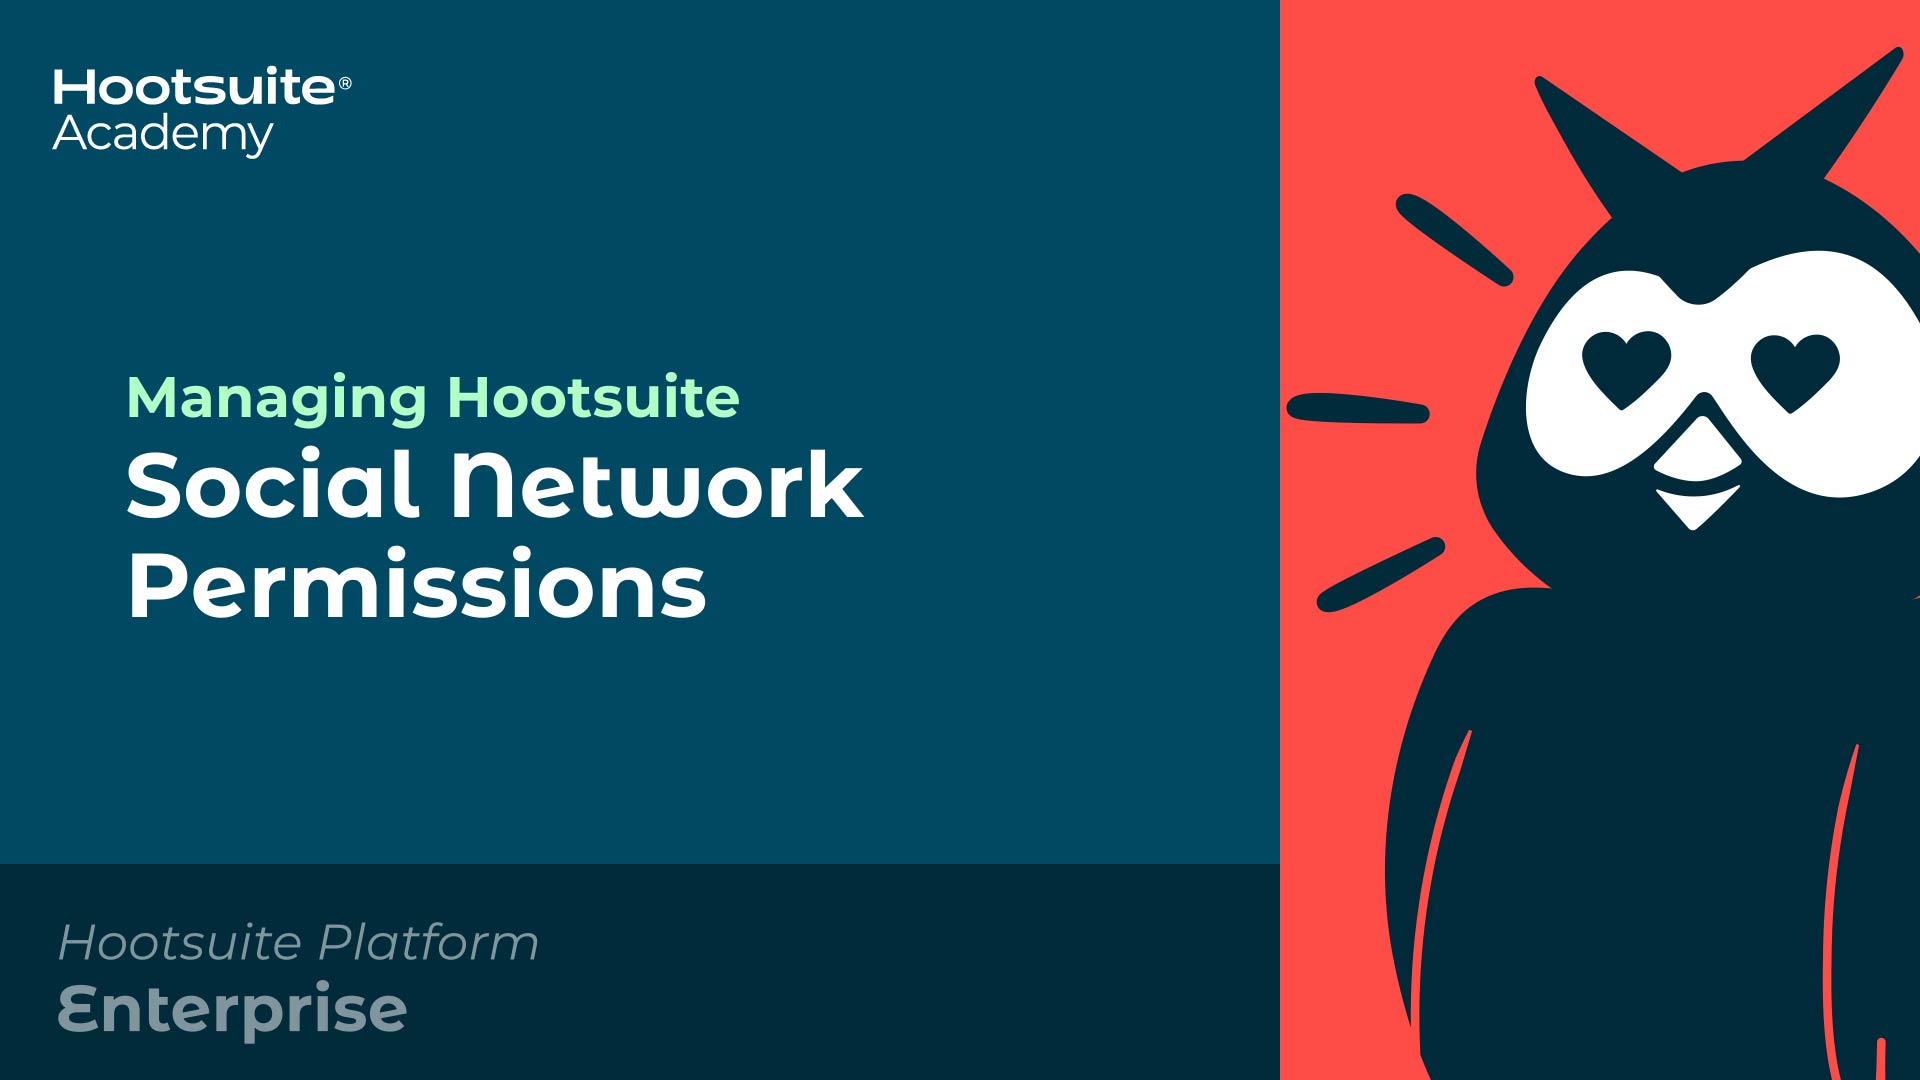 Managing Hootsuite social network permissions.